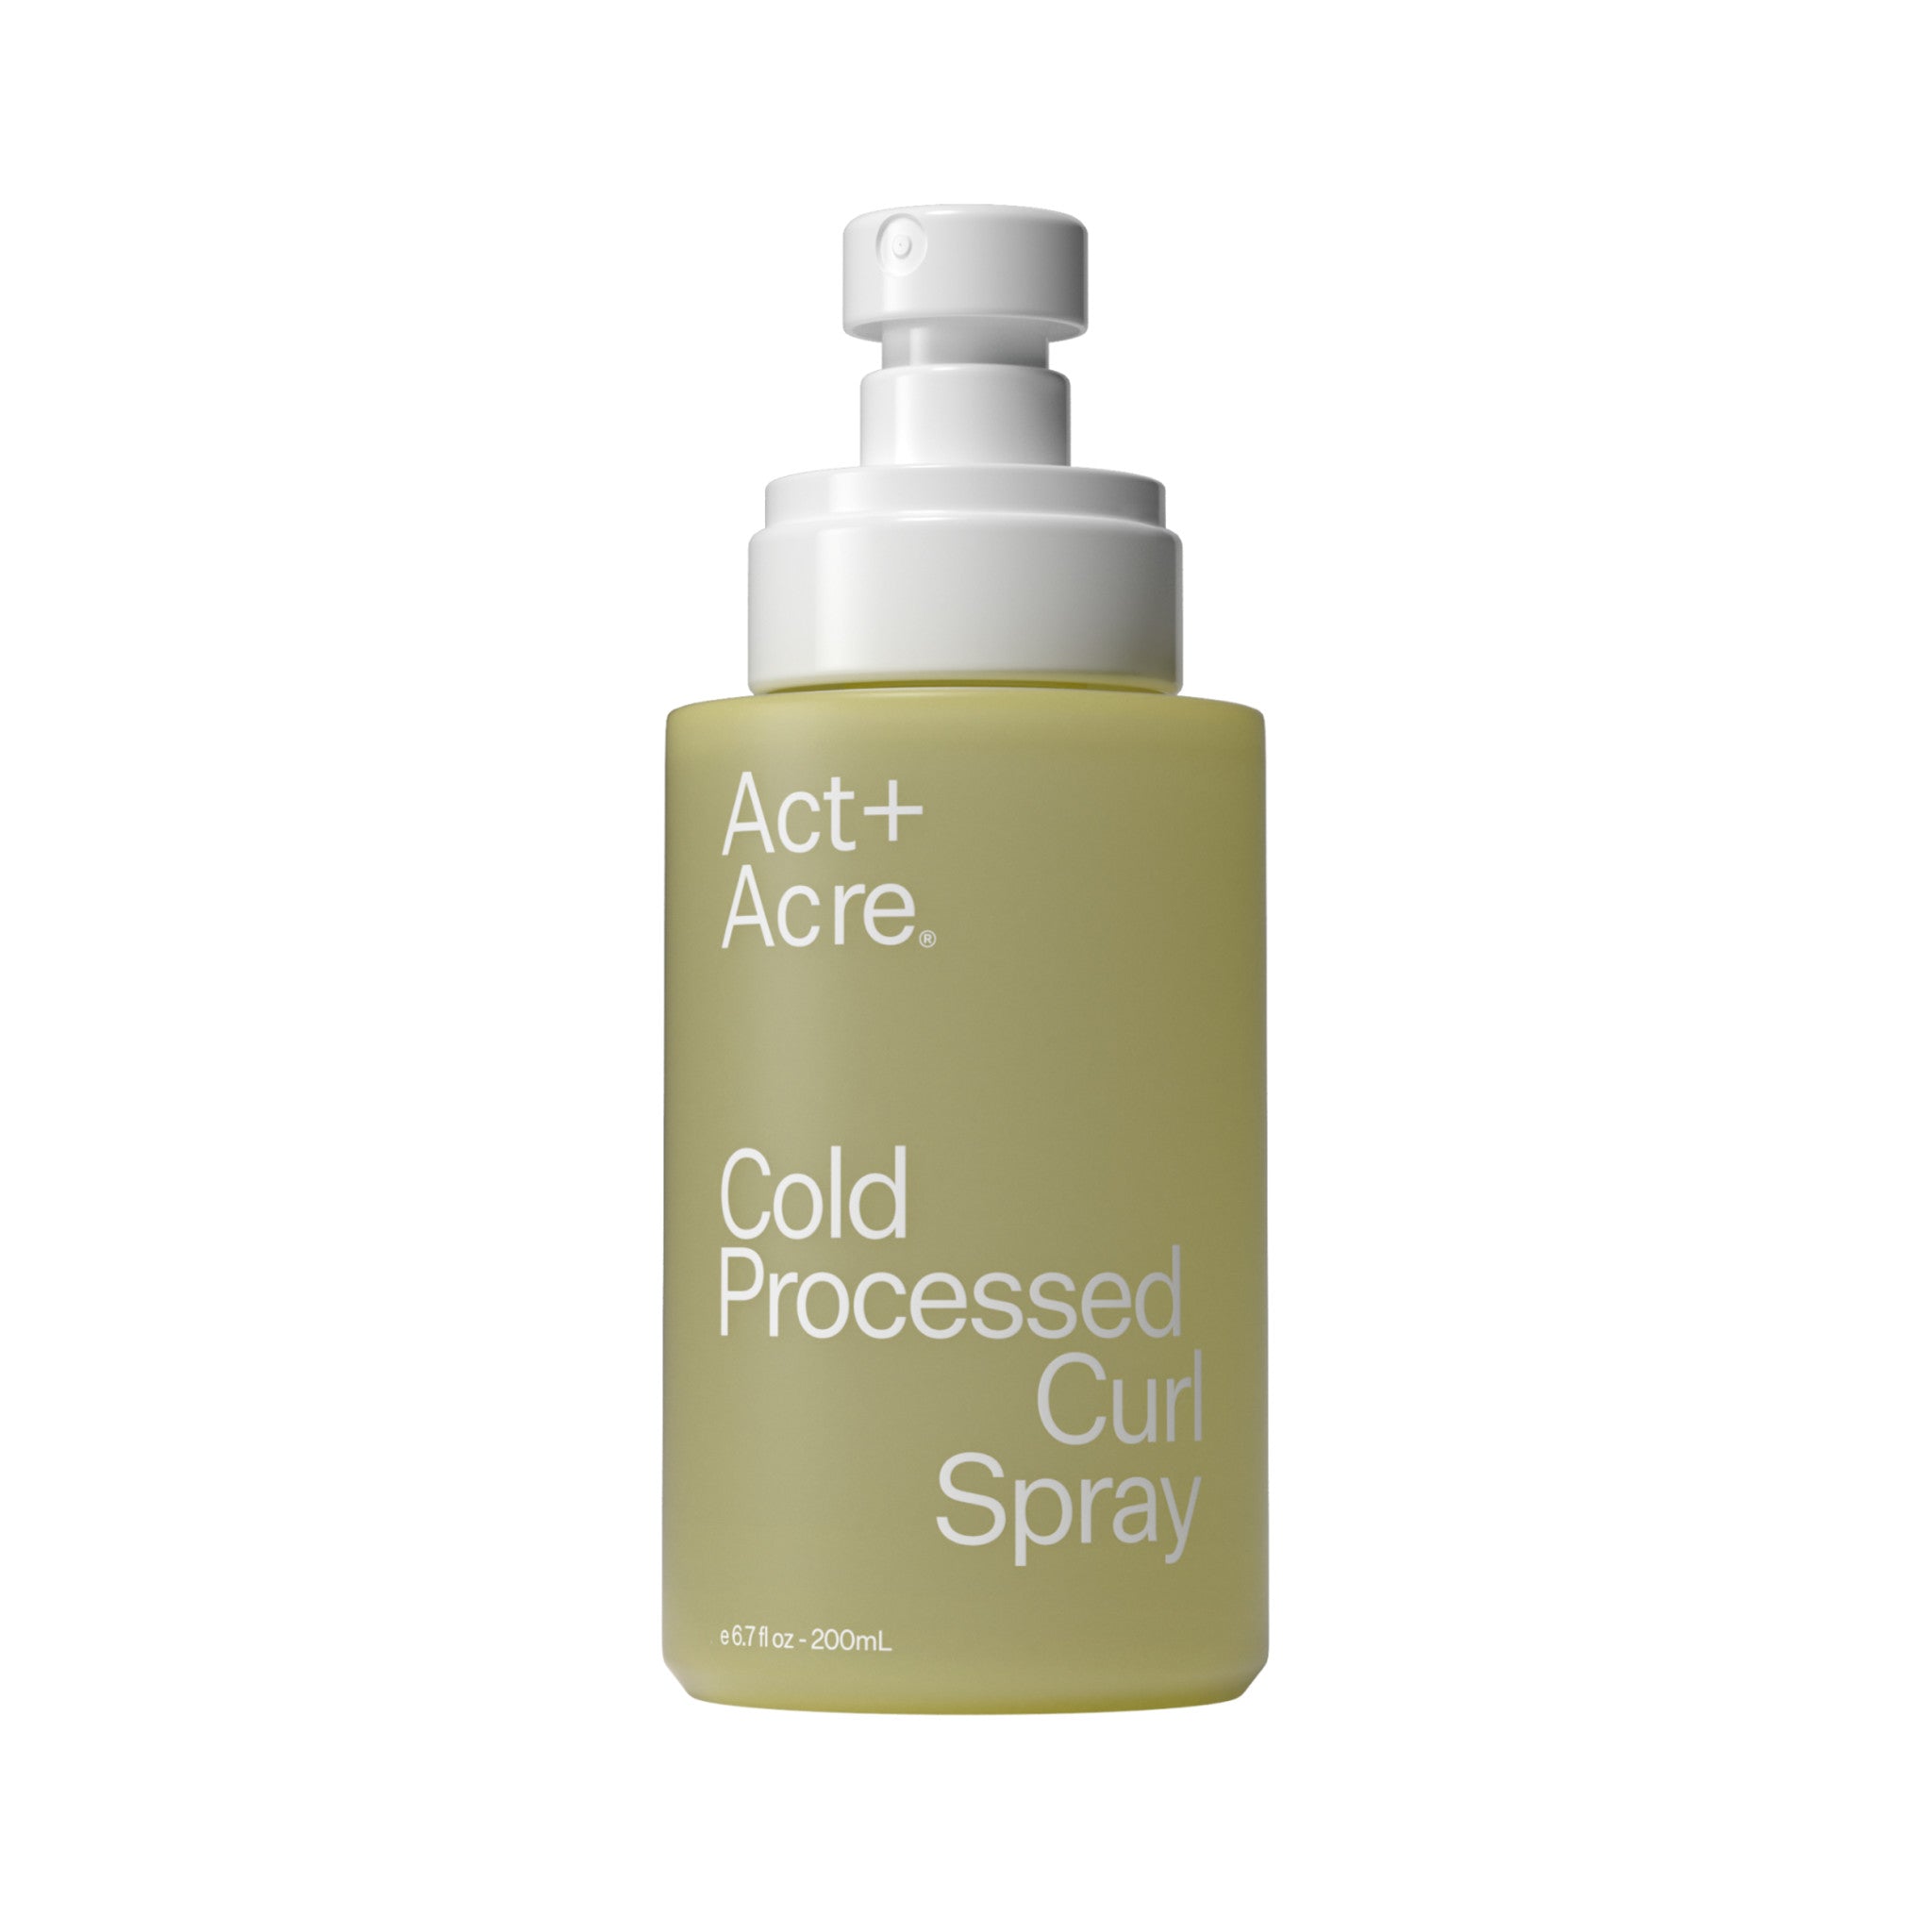 Act+Acre Curl Spray